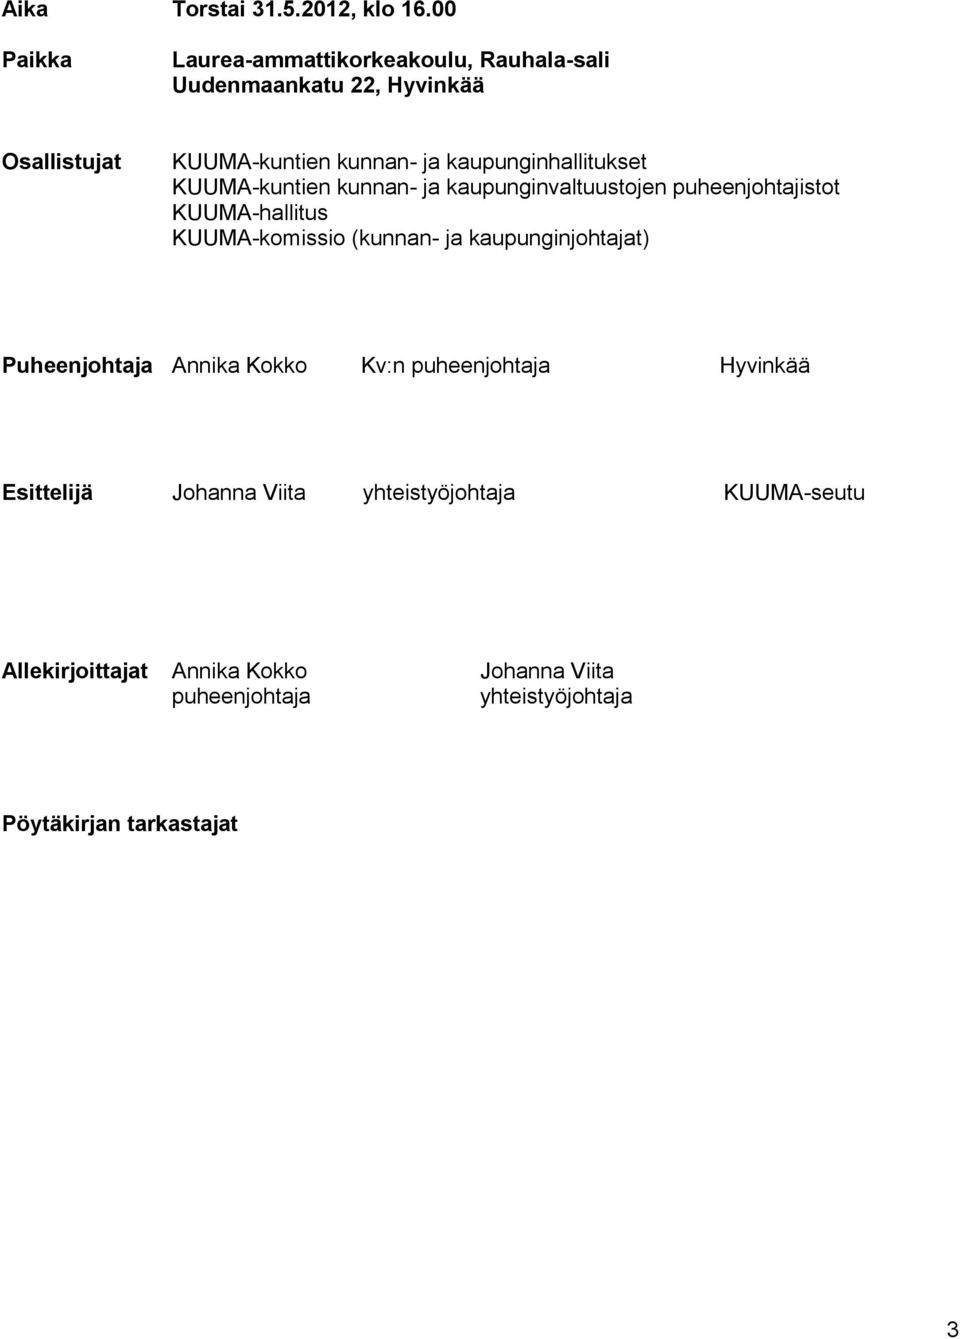 kaupunginhallitukset KUUMA-kuntien kunnan- ja kaupunginvaltuustojen puheenjohtajistot KUUMA-hallitus KUUMA-komissio (kunnan-